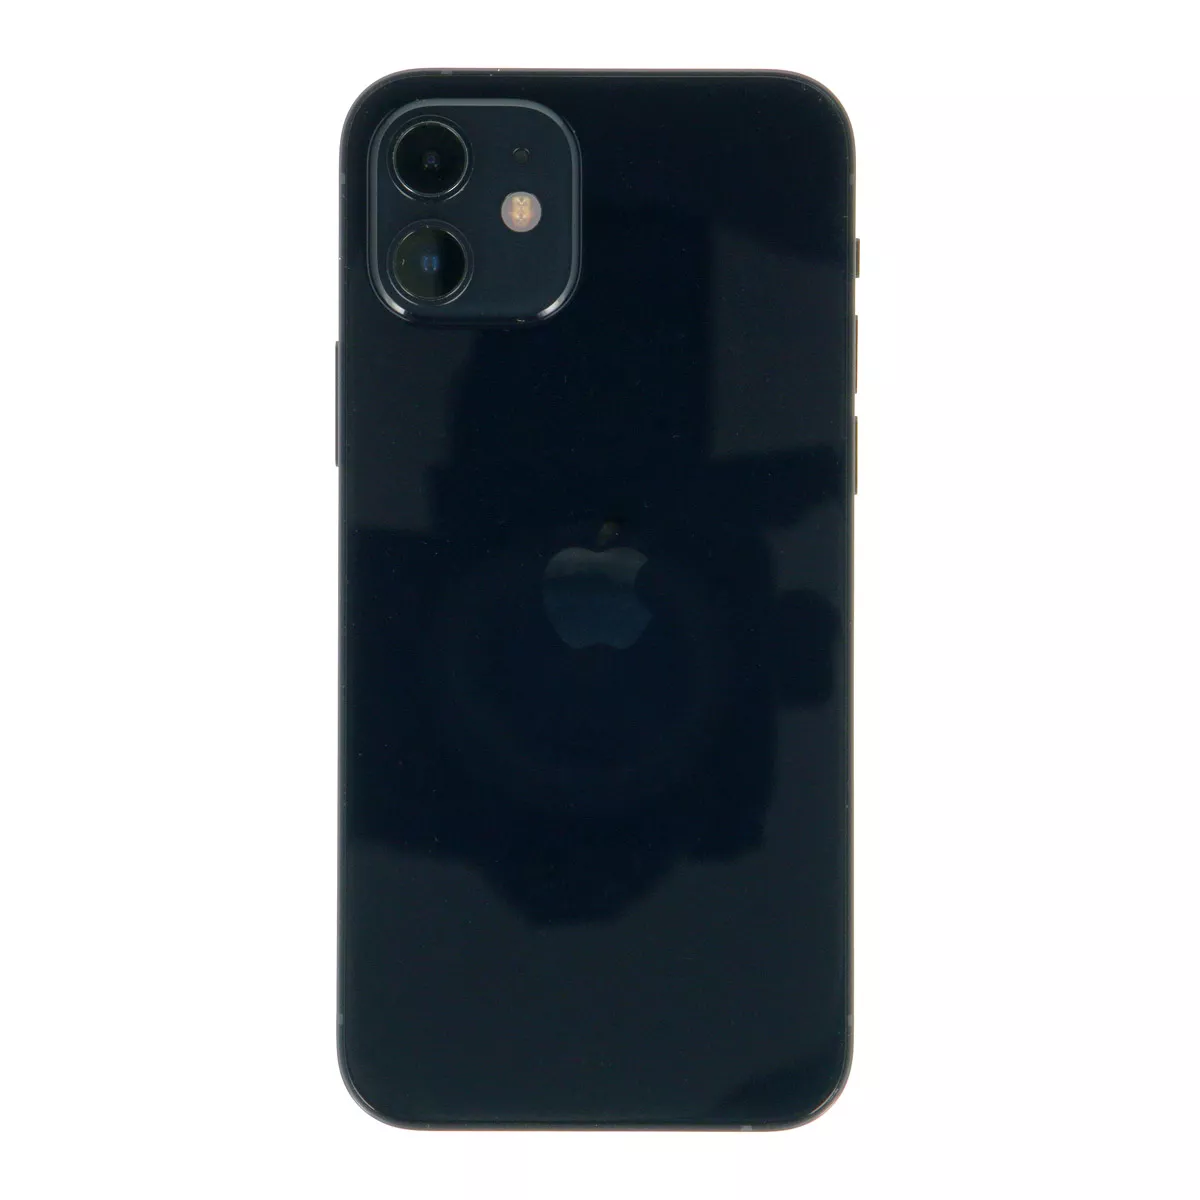 Apple iPhone 12 Mini 64 GB Black B